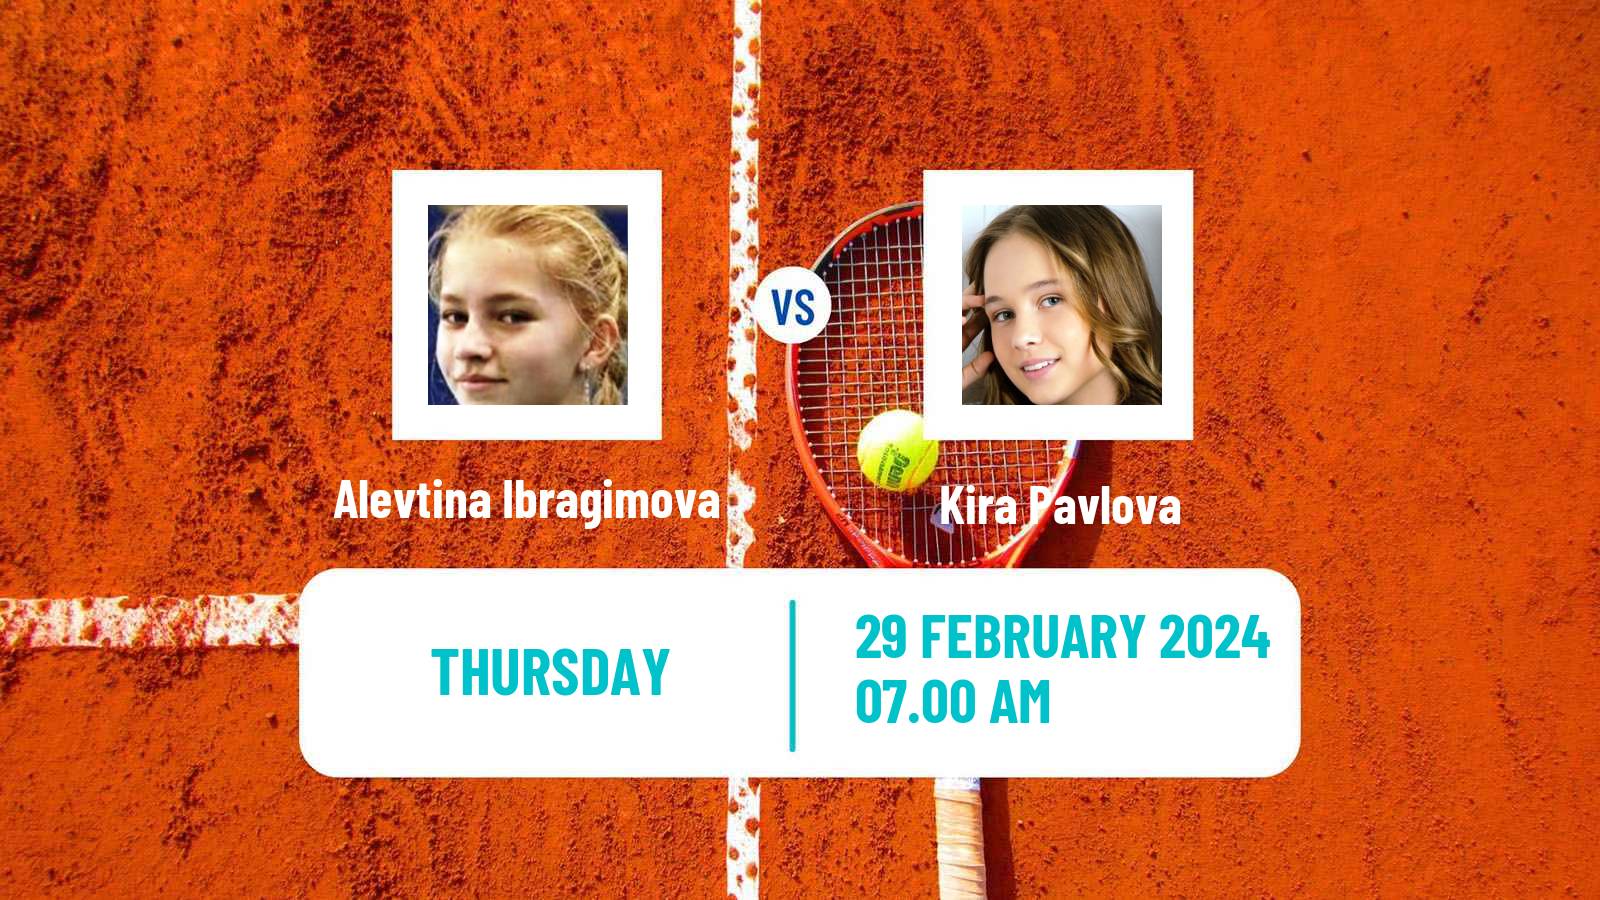 Tennis ITF W50 Macon Women Alevtina Ibragimova - Kira Pavlova